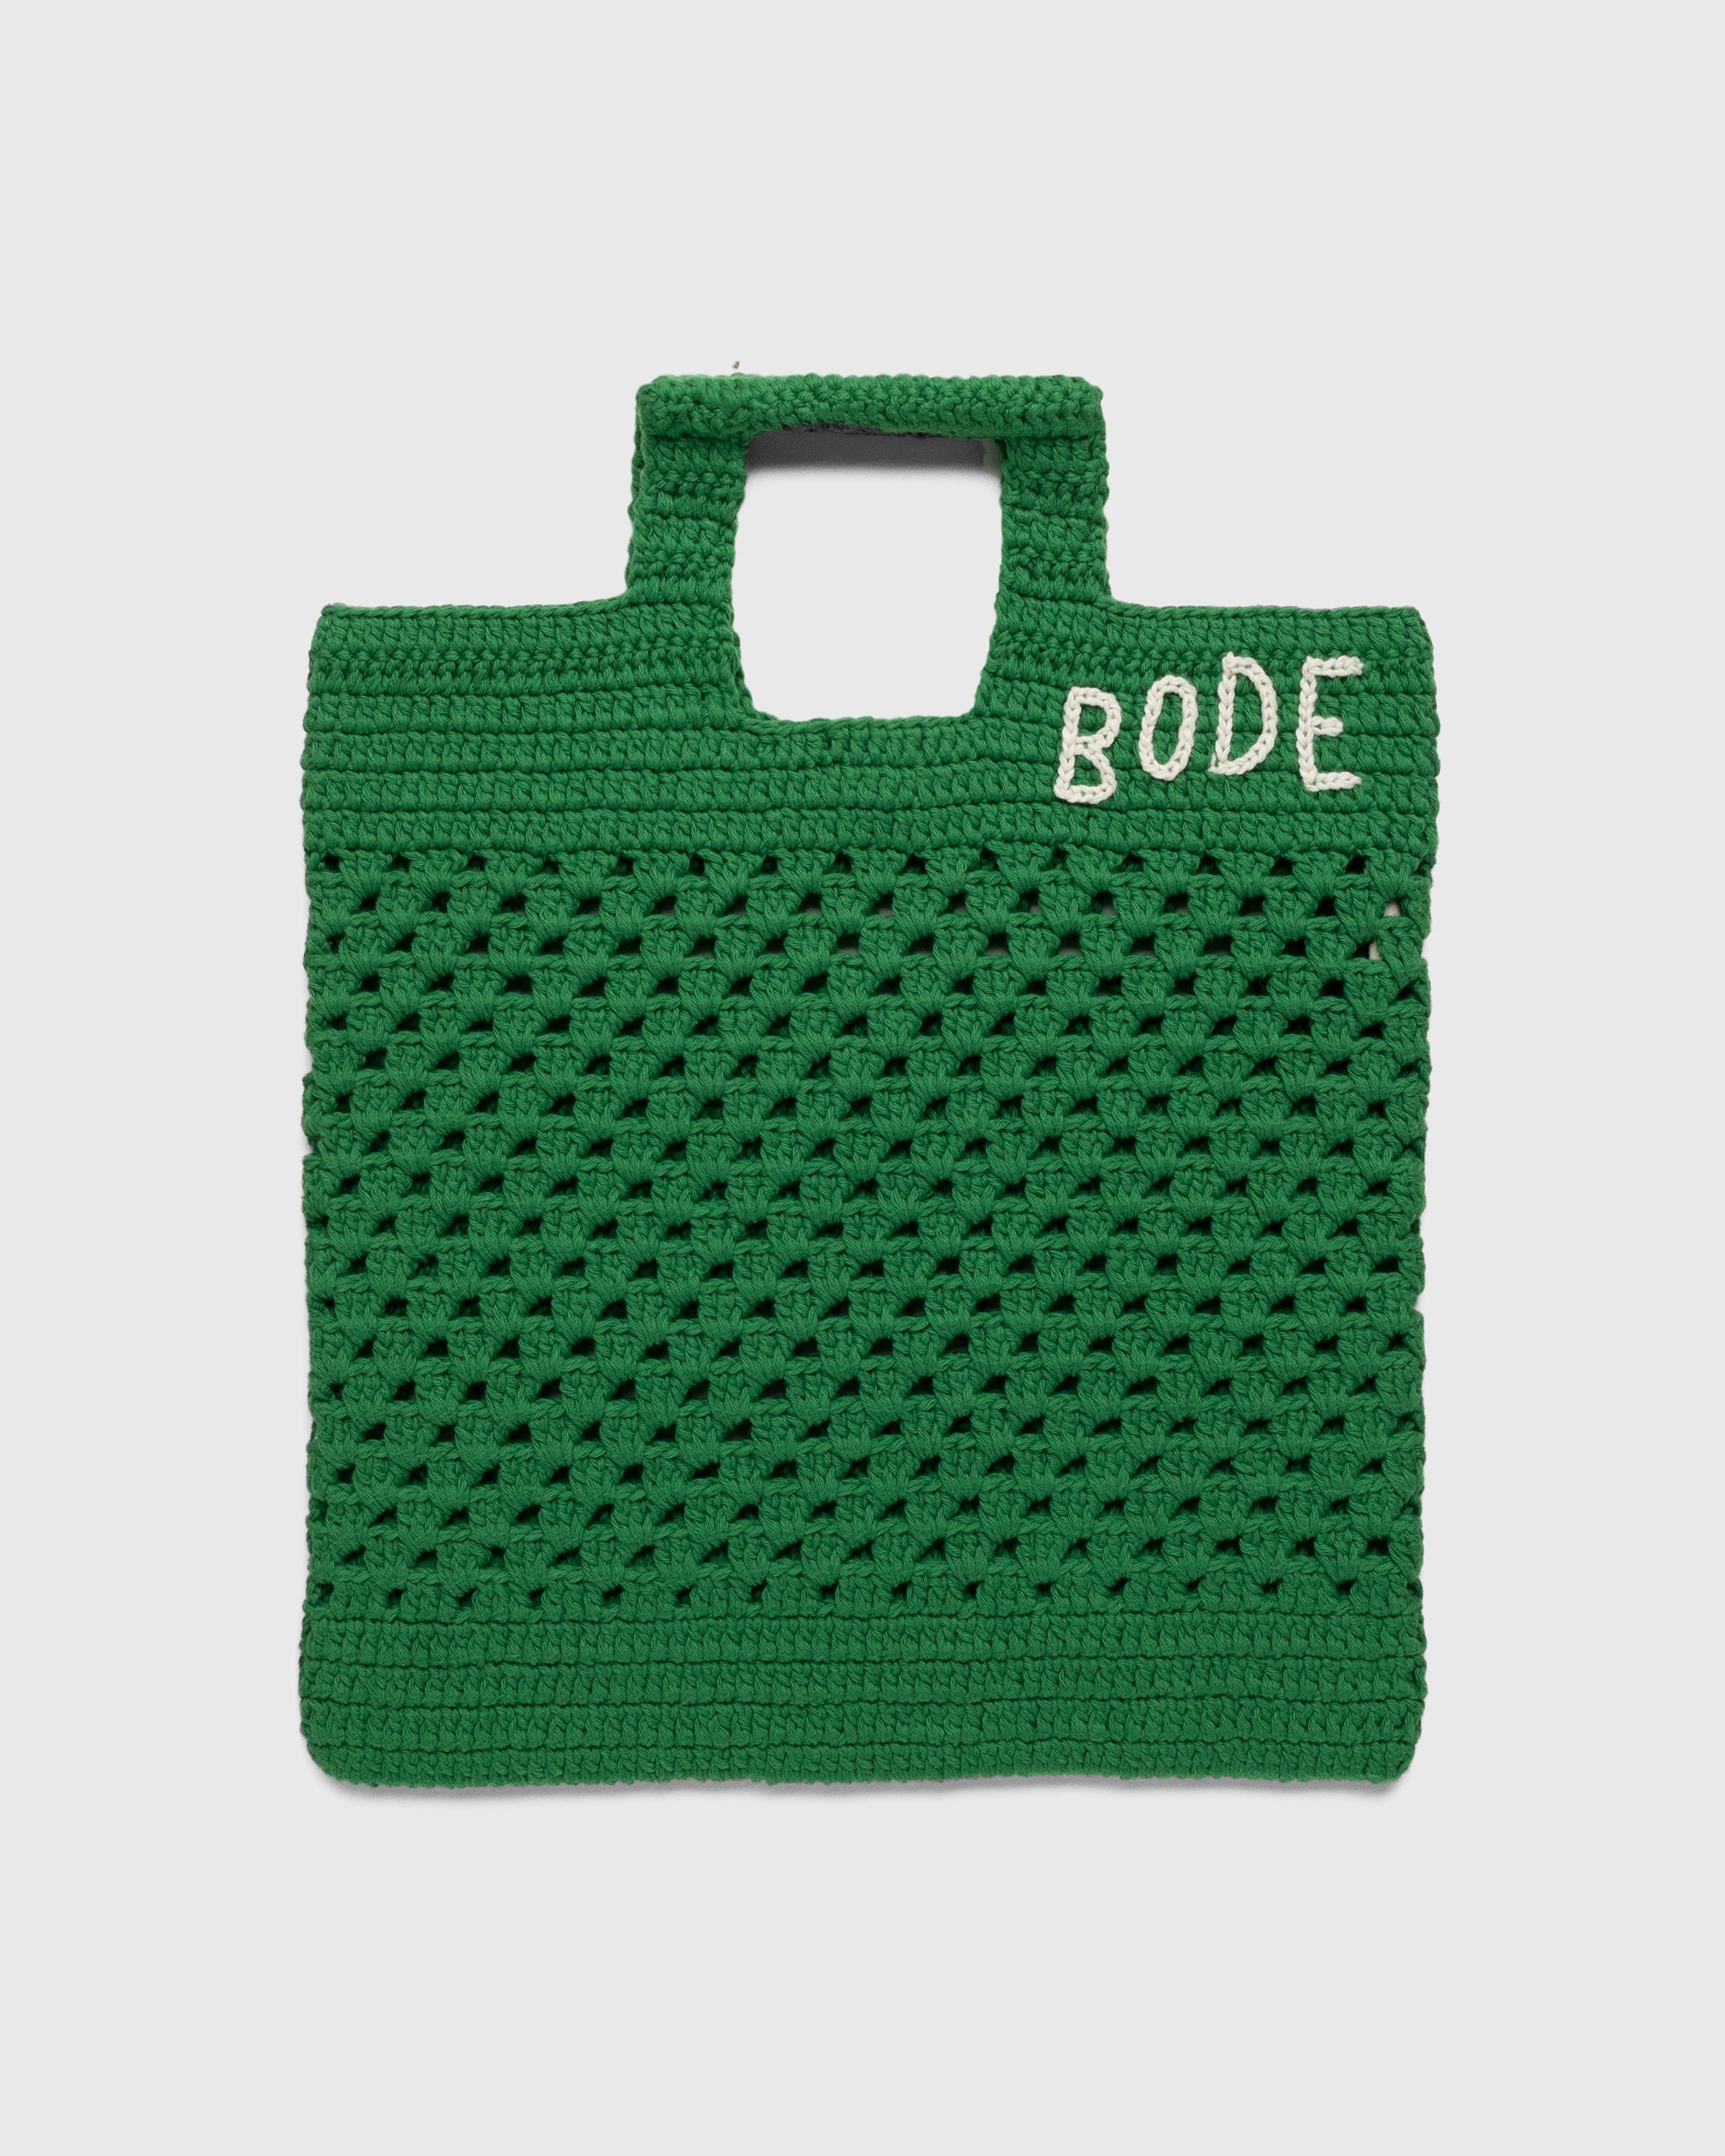 Bode - Crochet Tote Green - Accessories - Green - Image 1